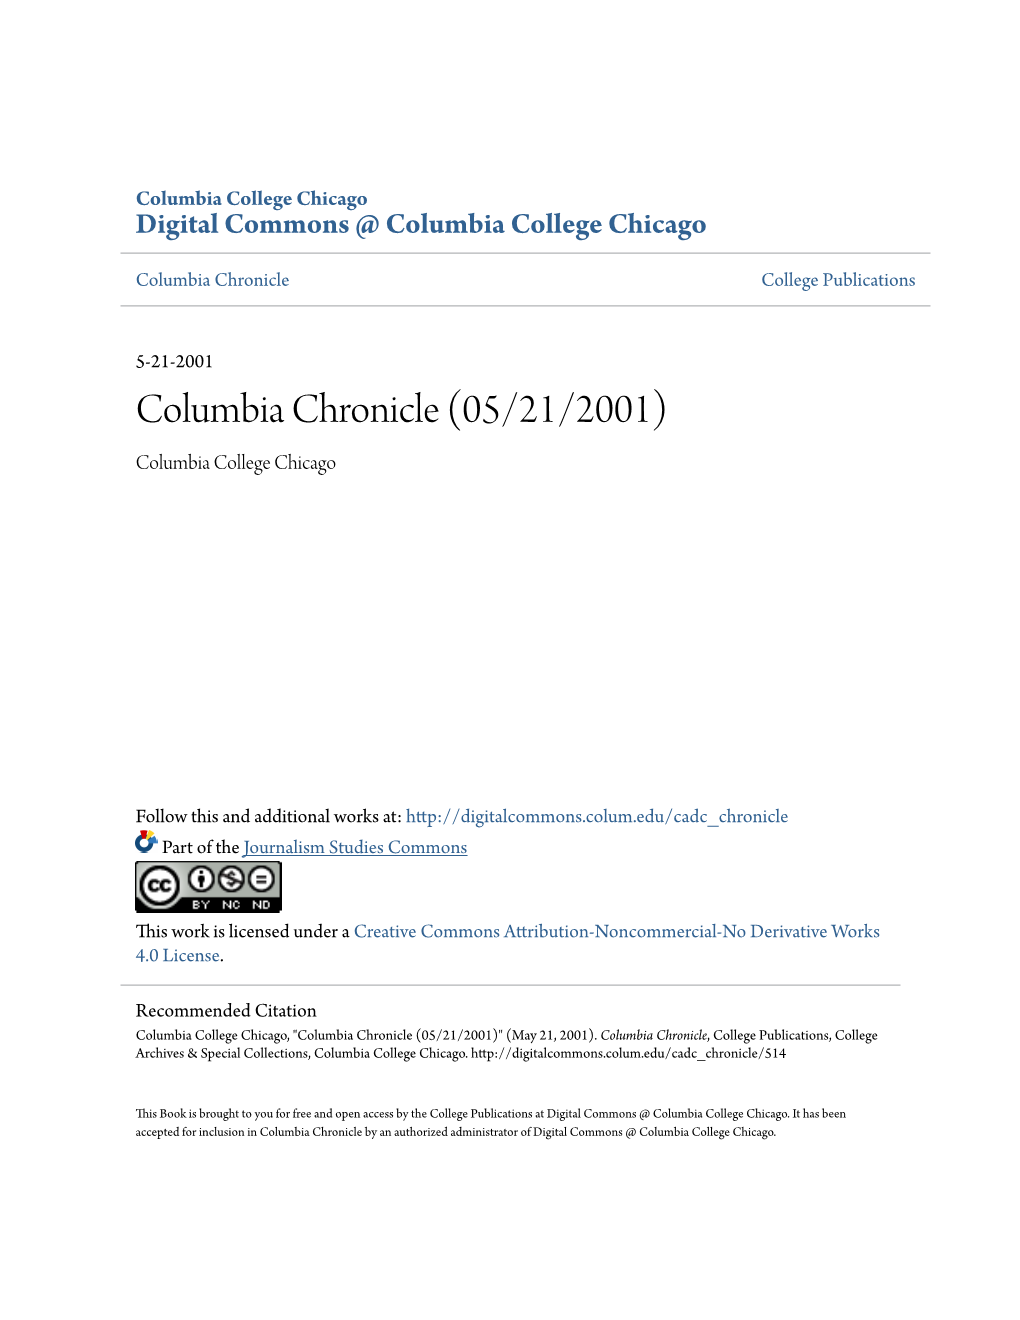 Columbia Chronicle (05/21/2001) Columbia College Chicago